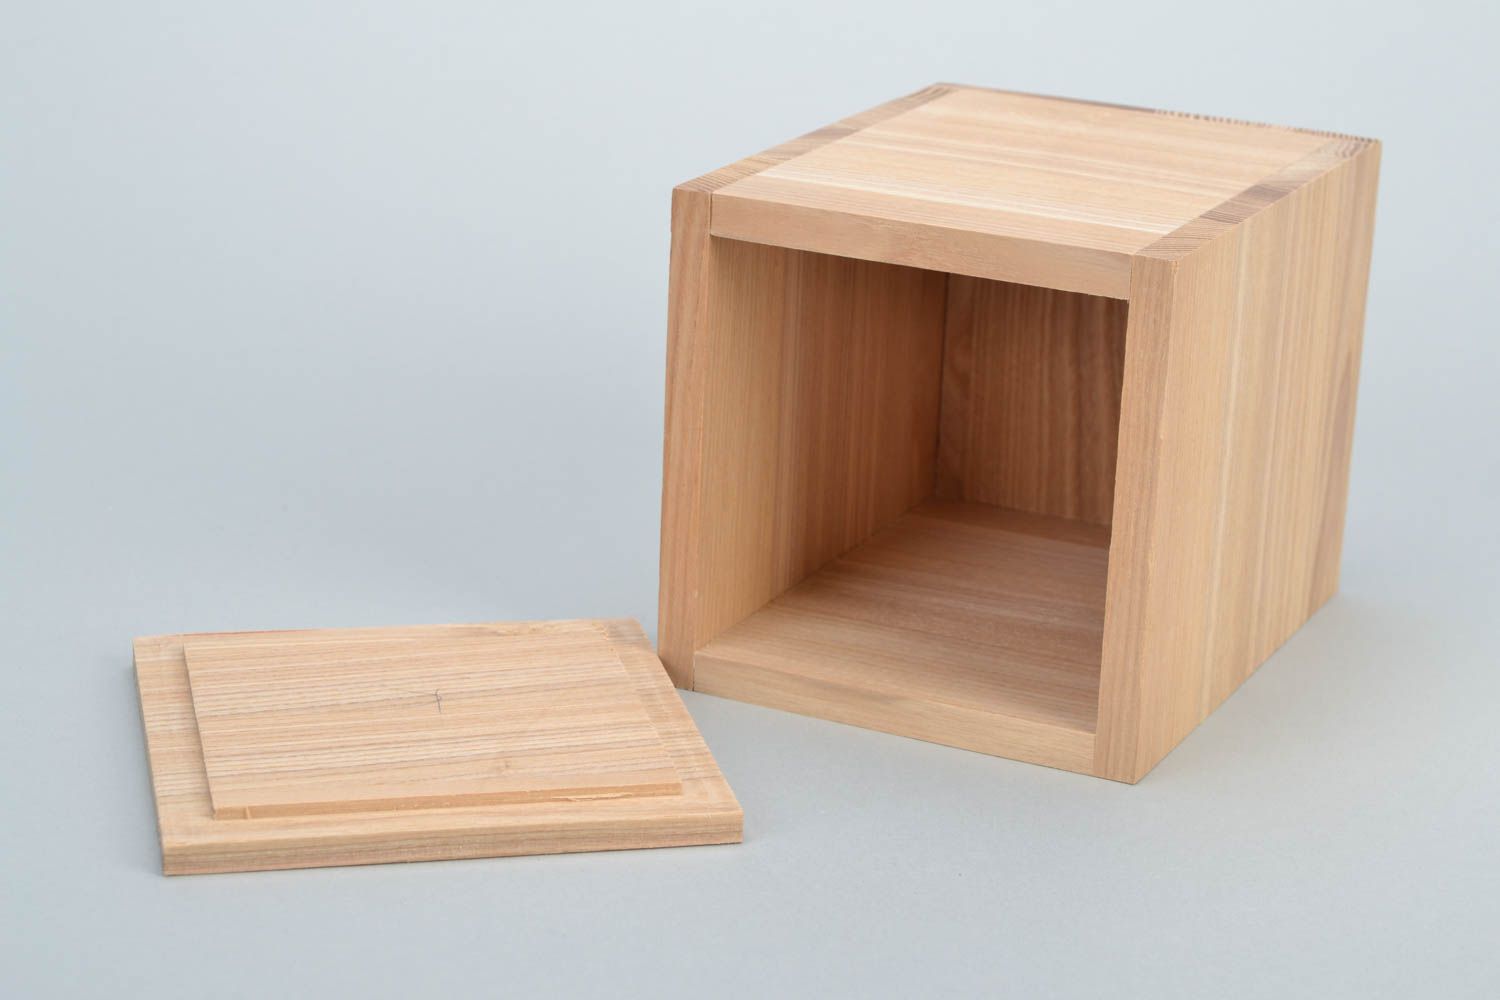 Handmade rectangular ash wood box craft blank for decoupage or painting photo 4